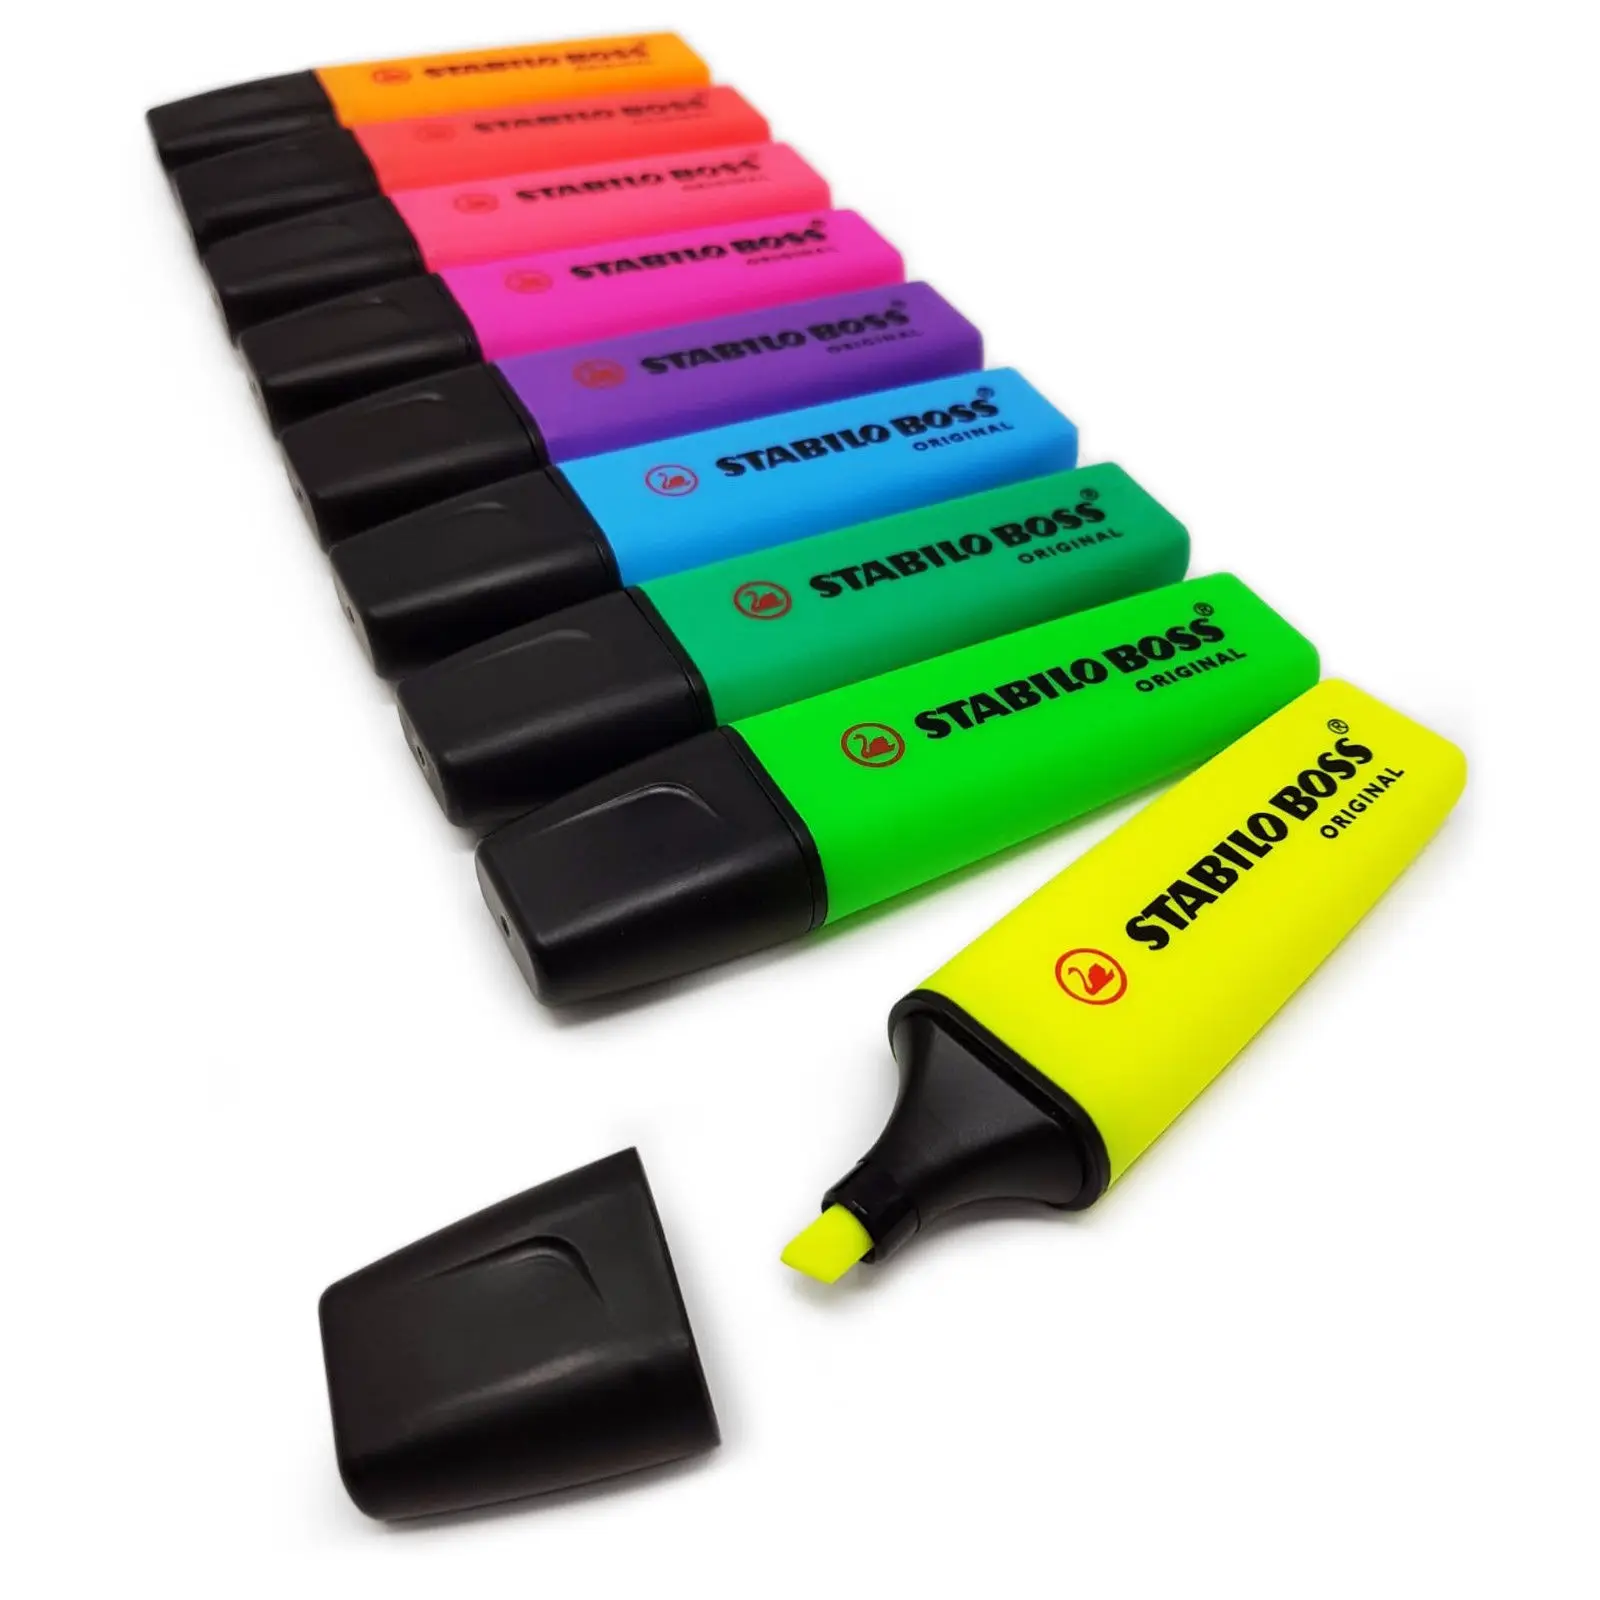 Banzai Zwijgend Koninklijke familie Pack Of 15 Stabilo Boss Highlighter Pens - Original 9 Colors & New 6 Pastel  Colors Highlighters - Paint Markers - AliExpress